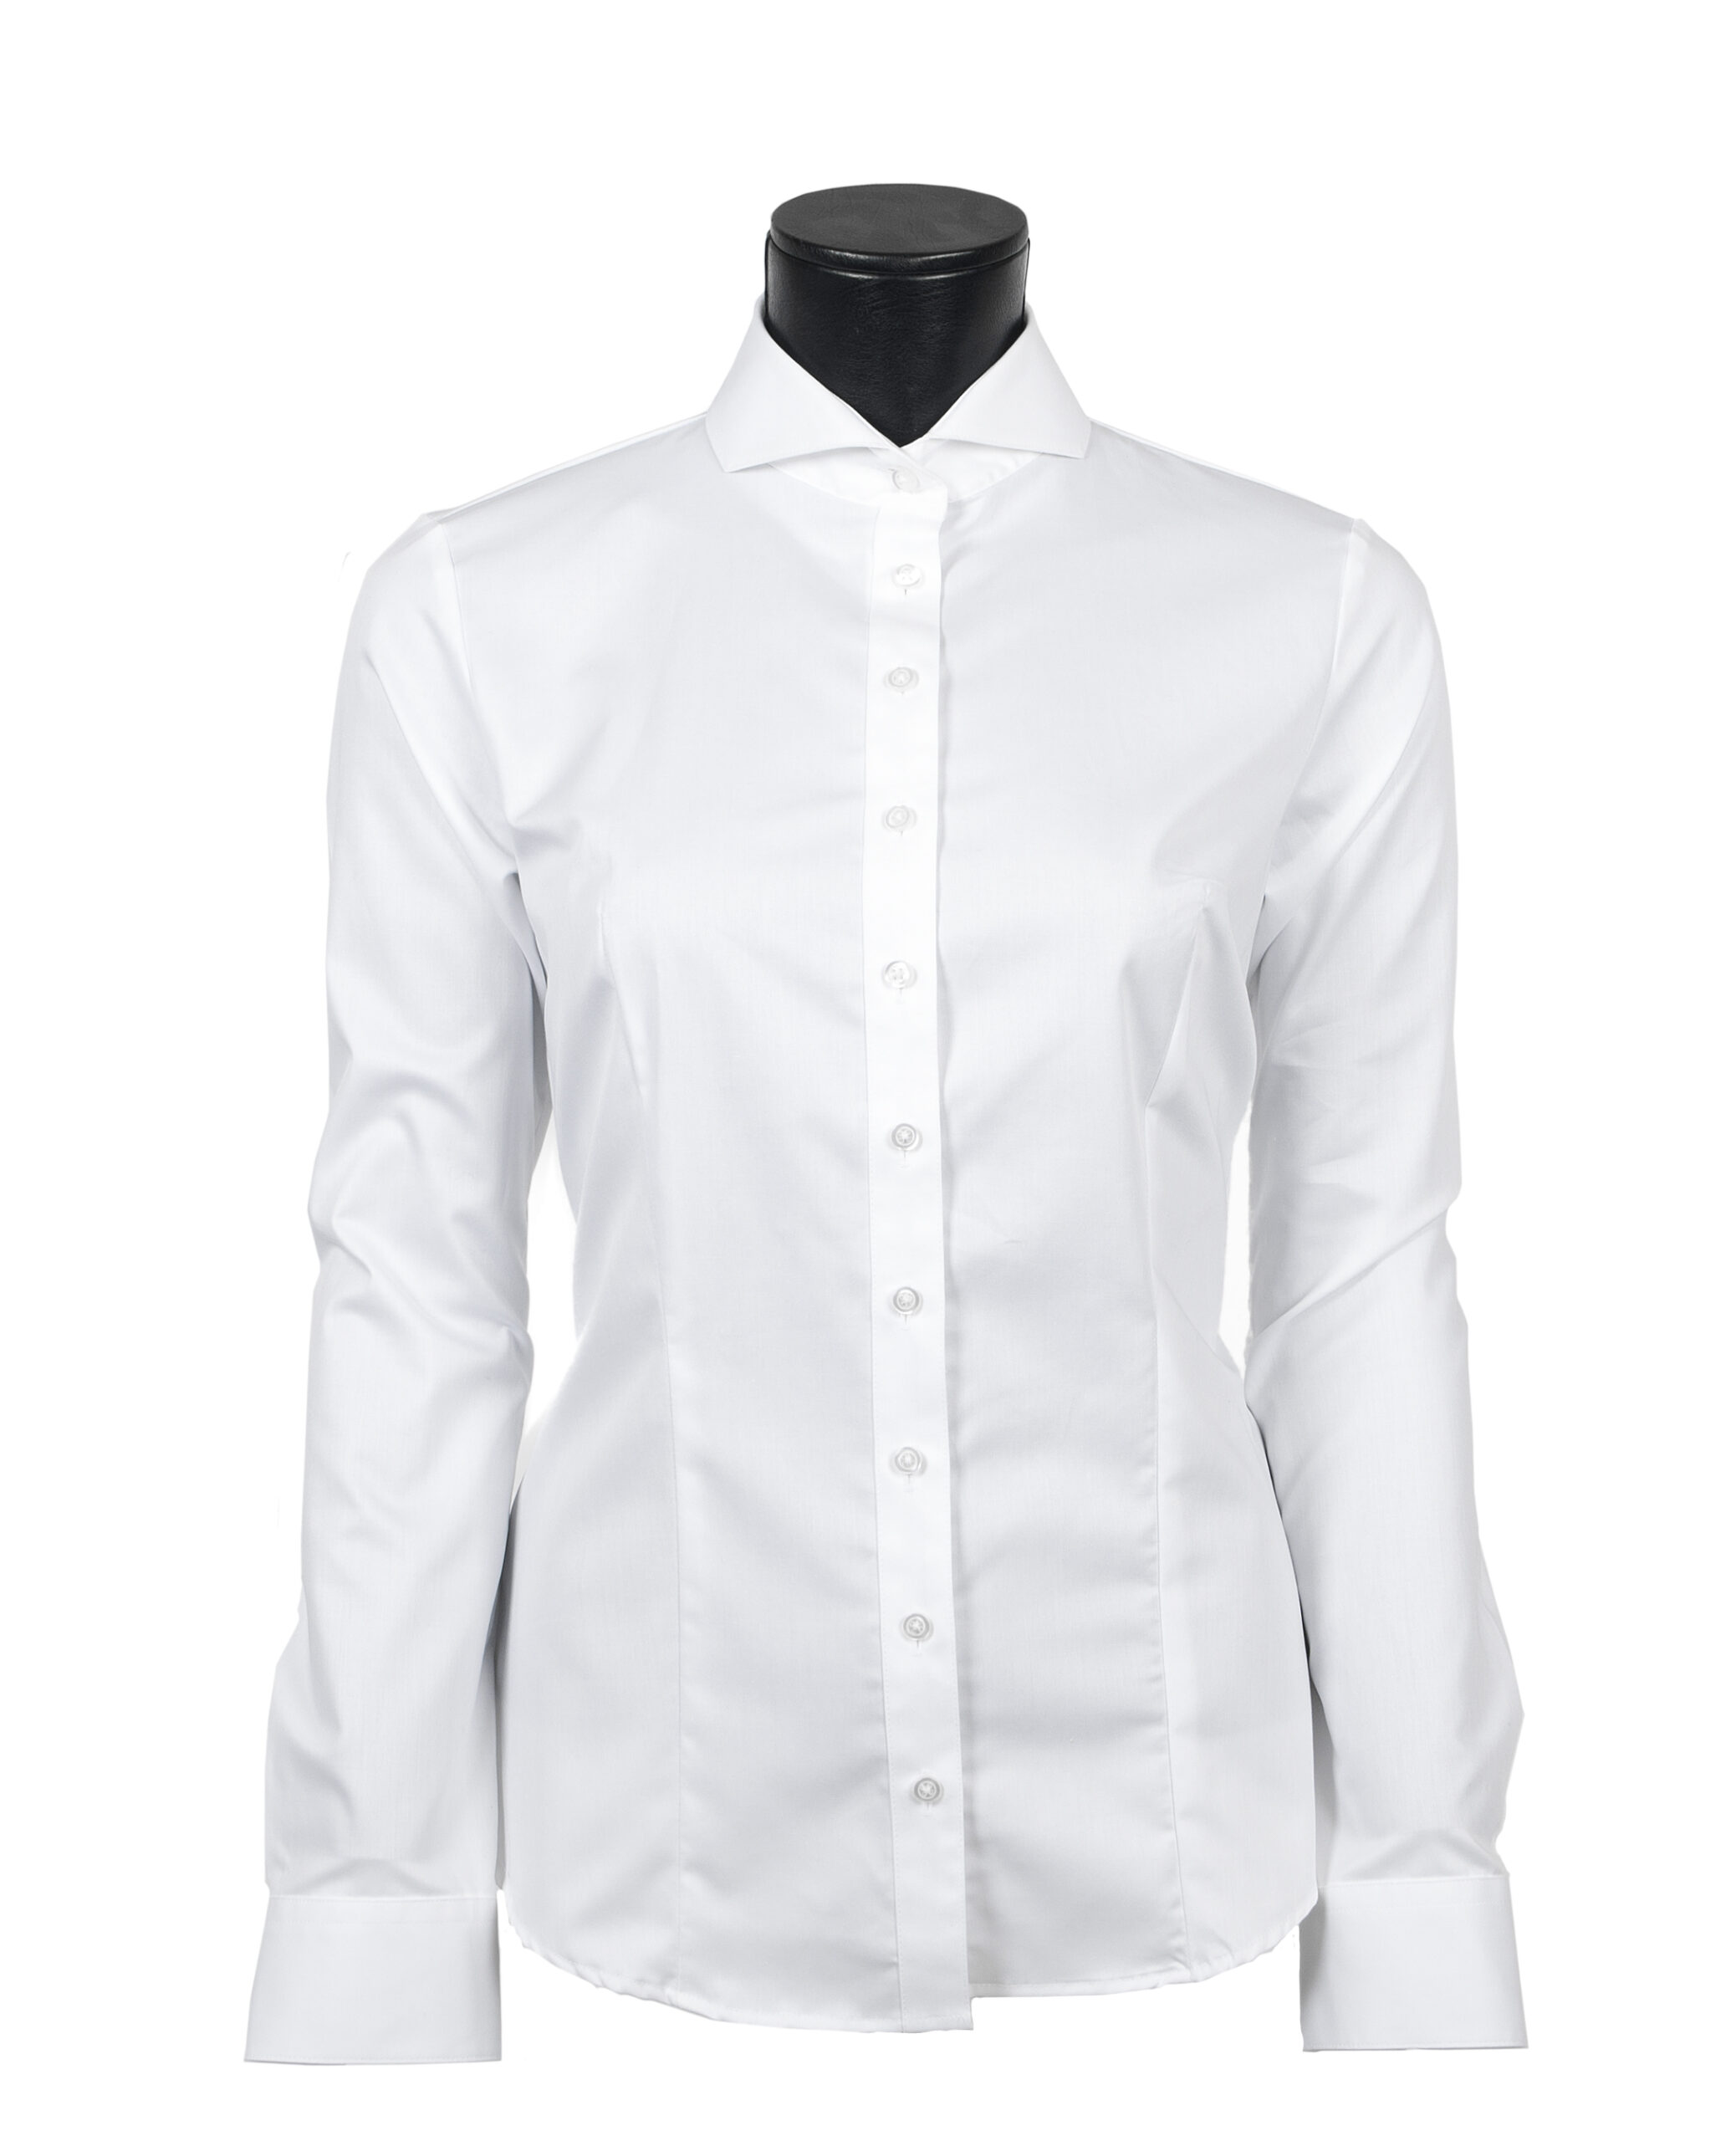 Herformuleren apotheek ga verder LCF 8009498 - Roos dames blouse Wit - LCF-overhemdenLCF-overhemden